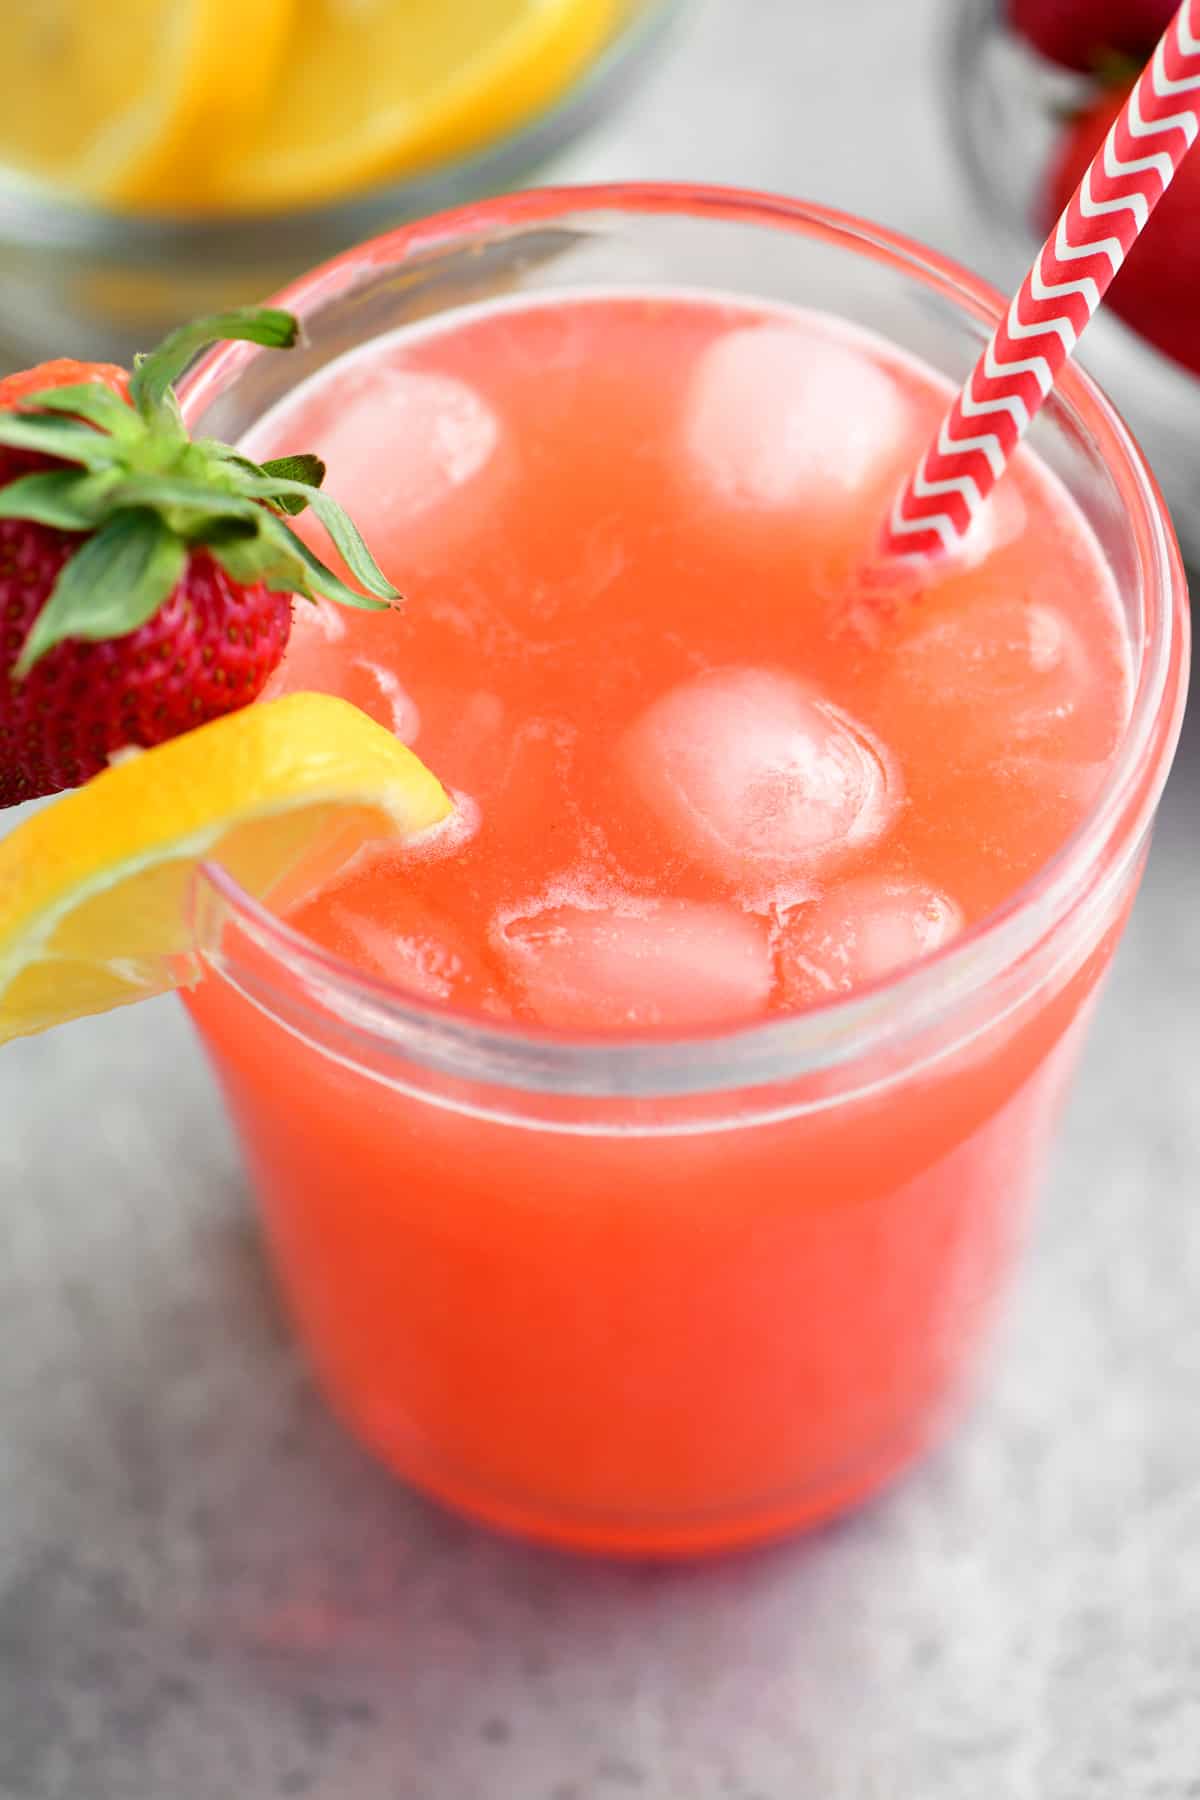 Freckled lemonade Red Robin copycat drink in a glass.